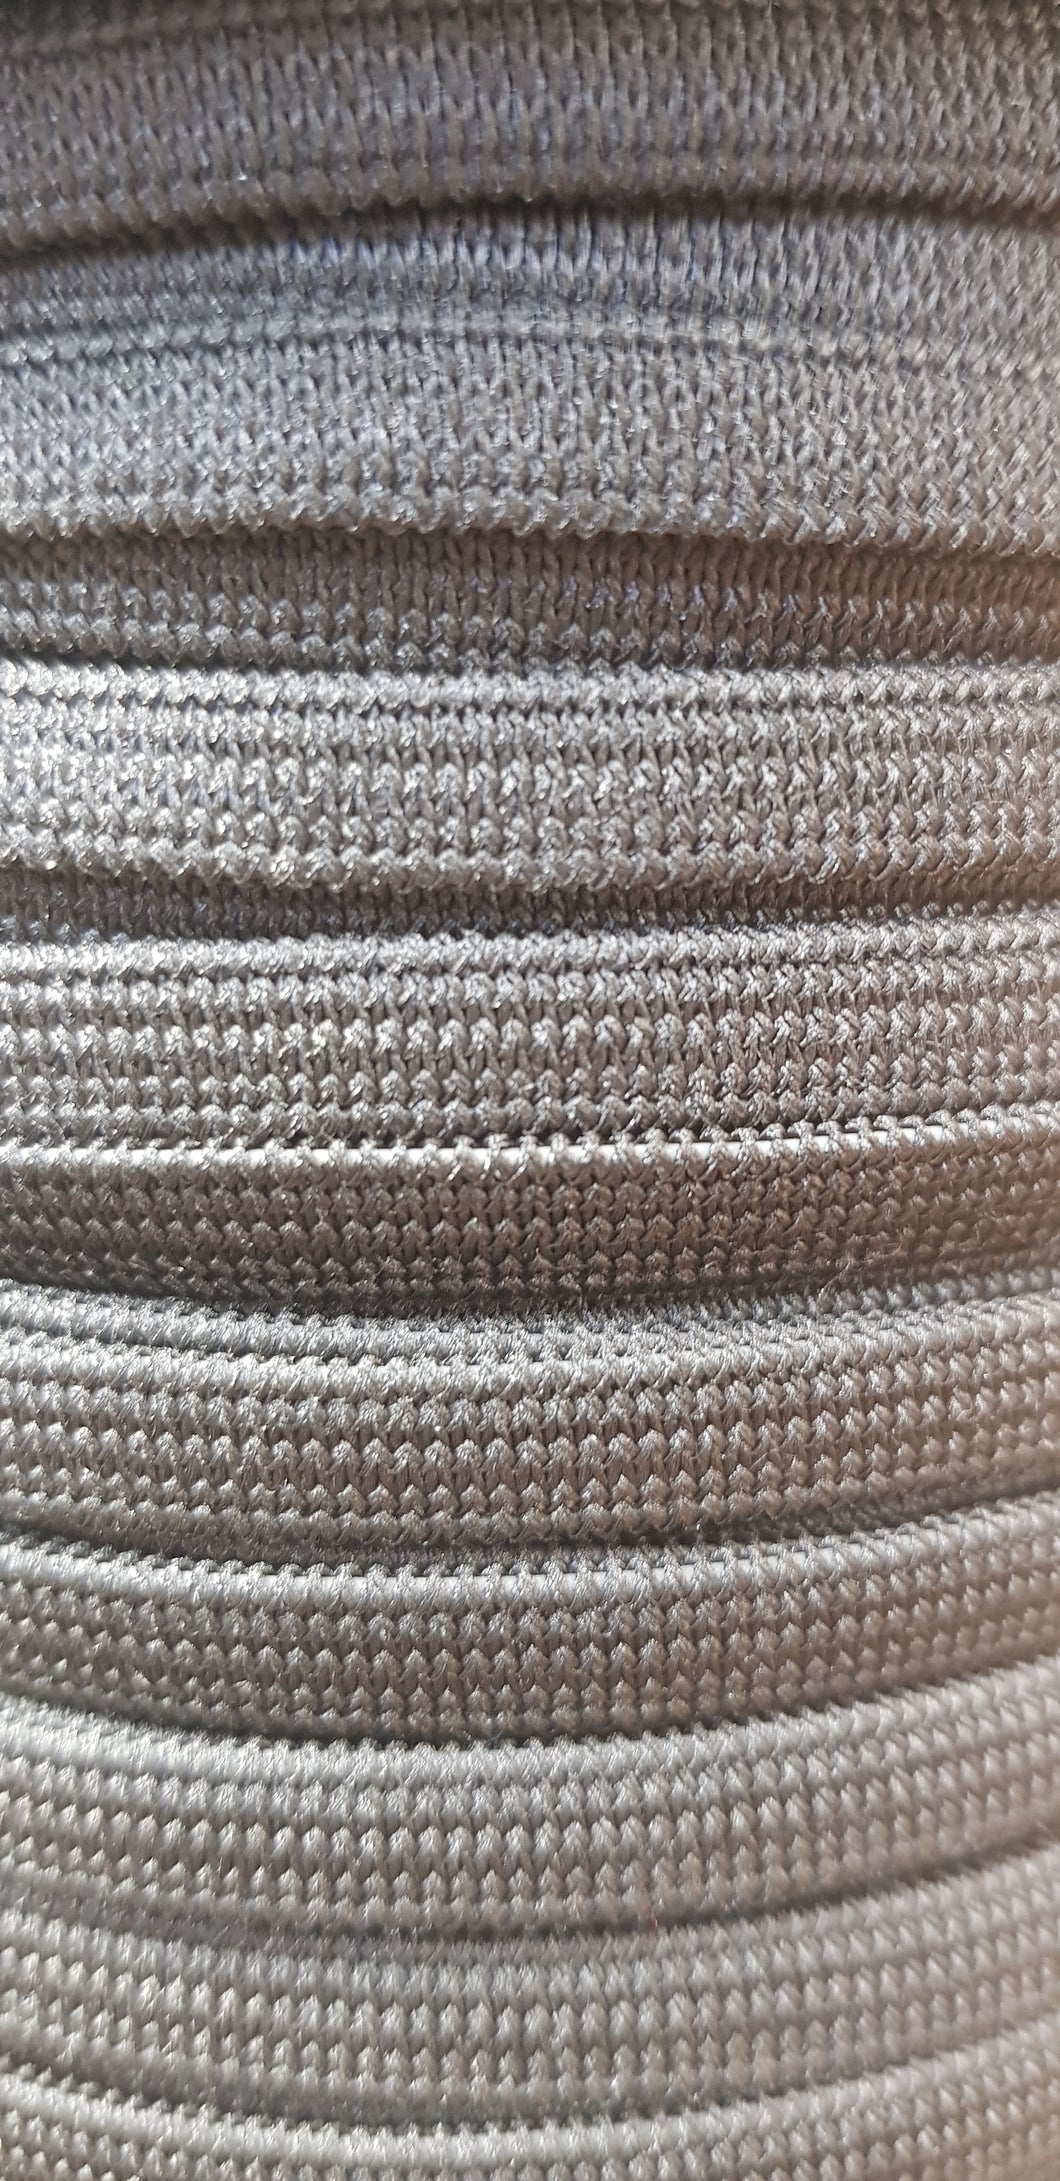 8mm White Elastic Knitted/Weaved 50m